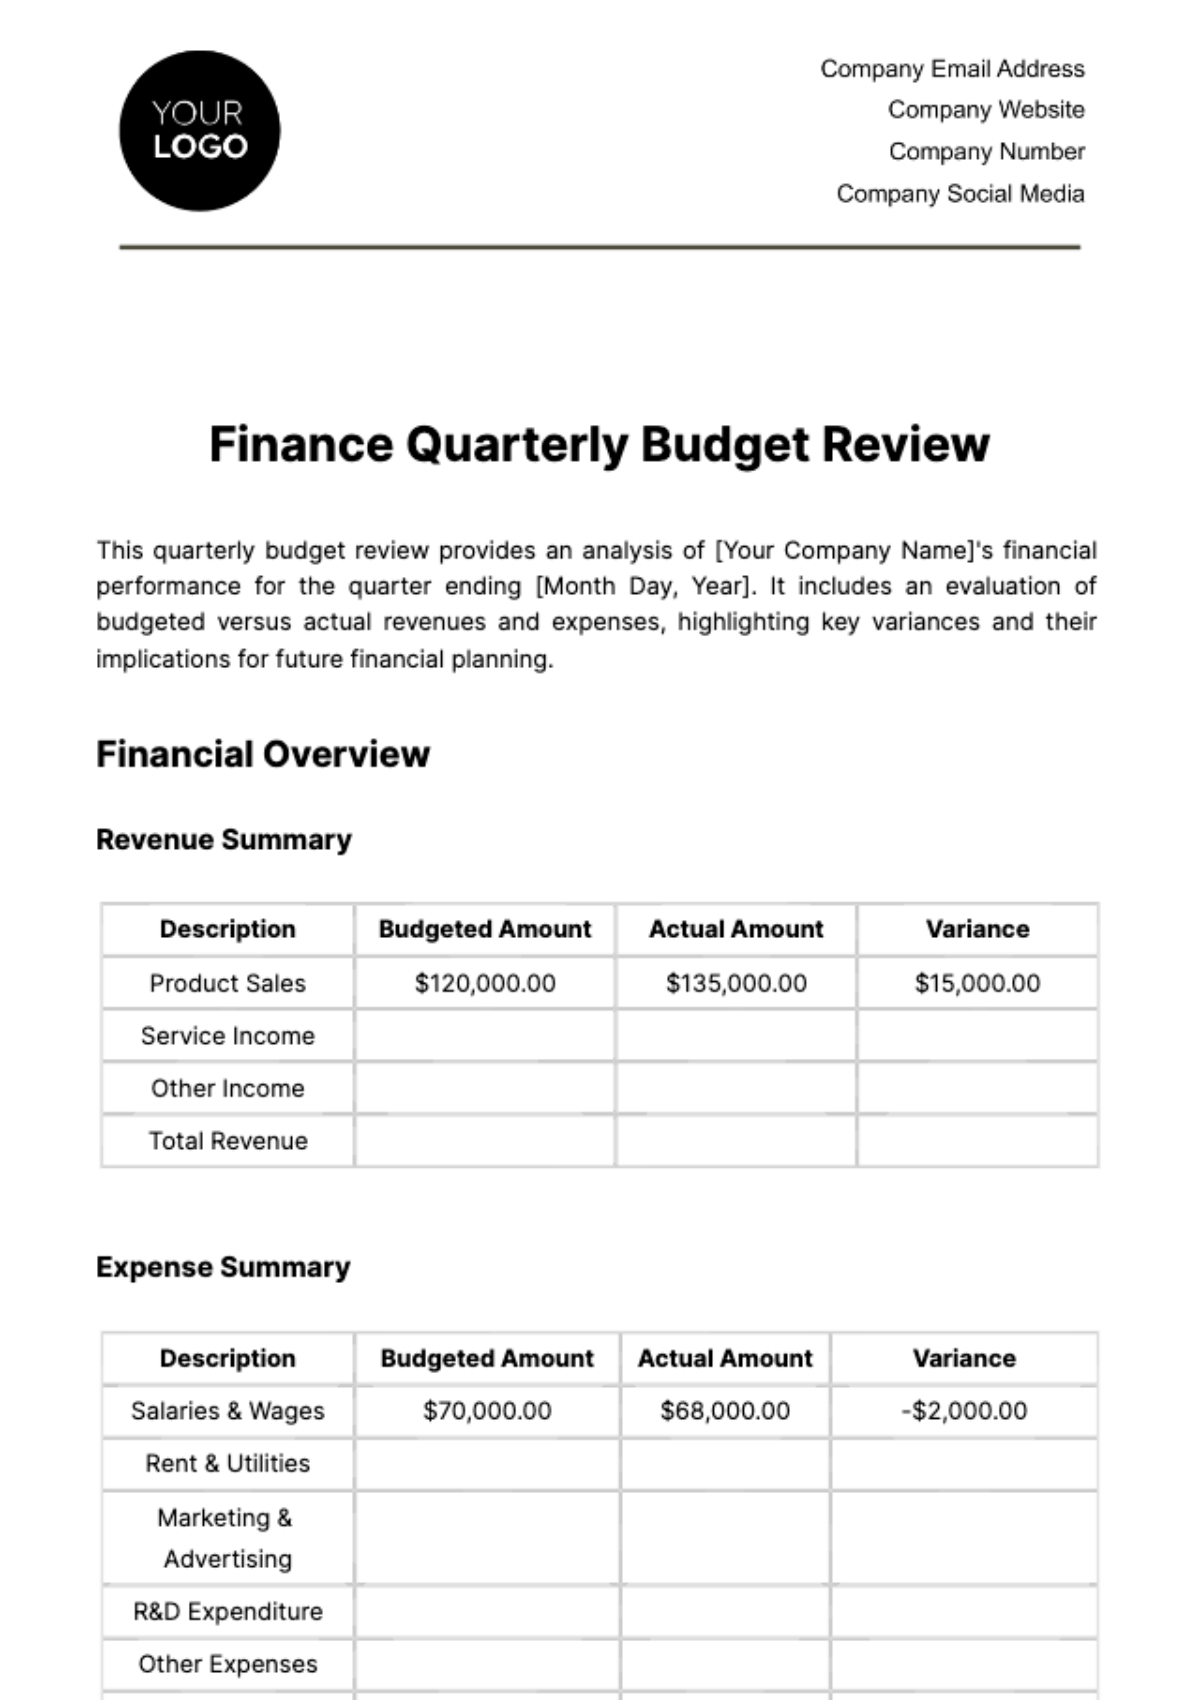 Finance Quarterly Budget Review Template